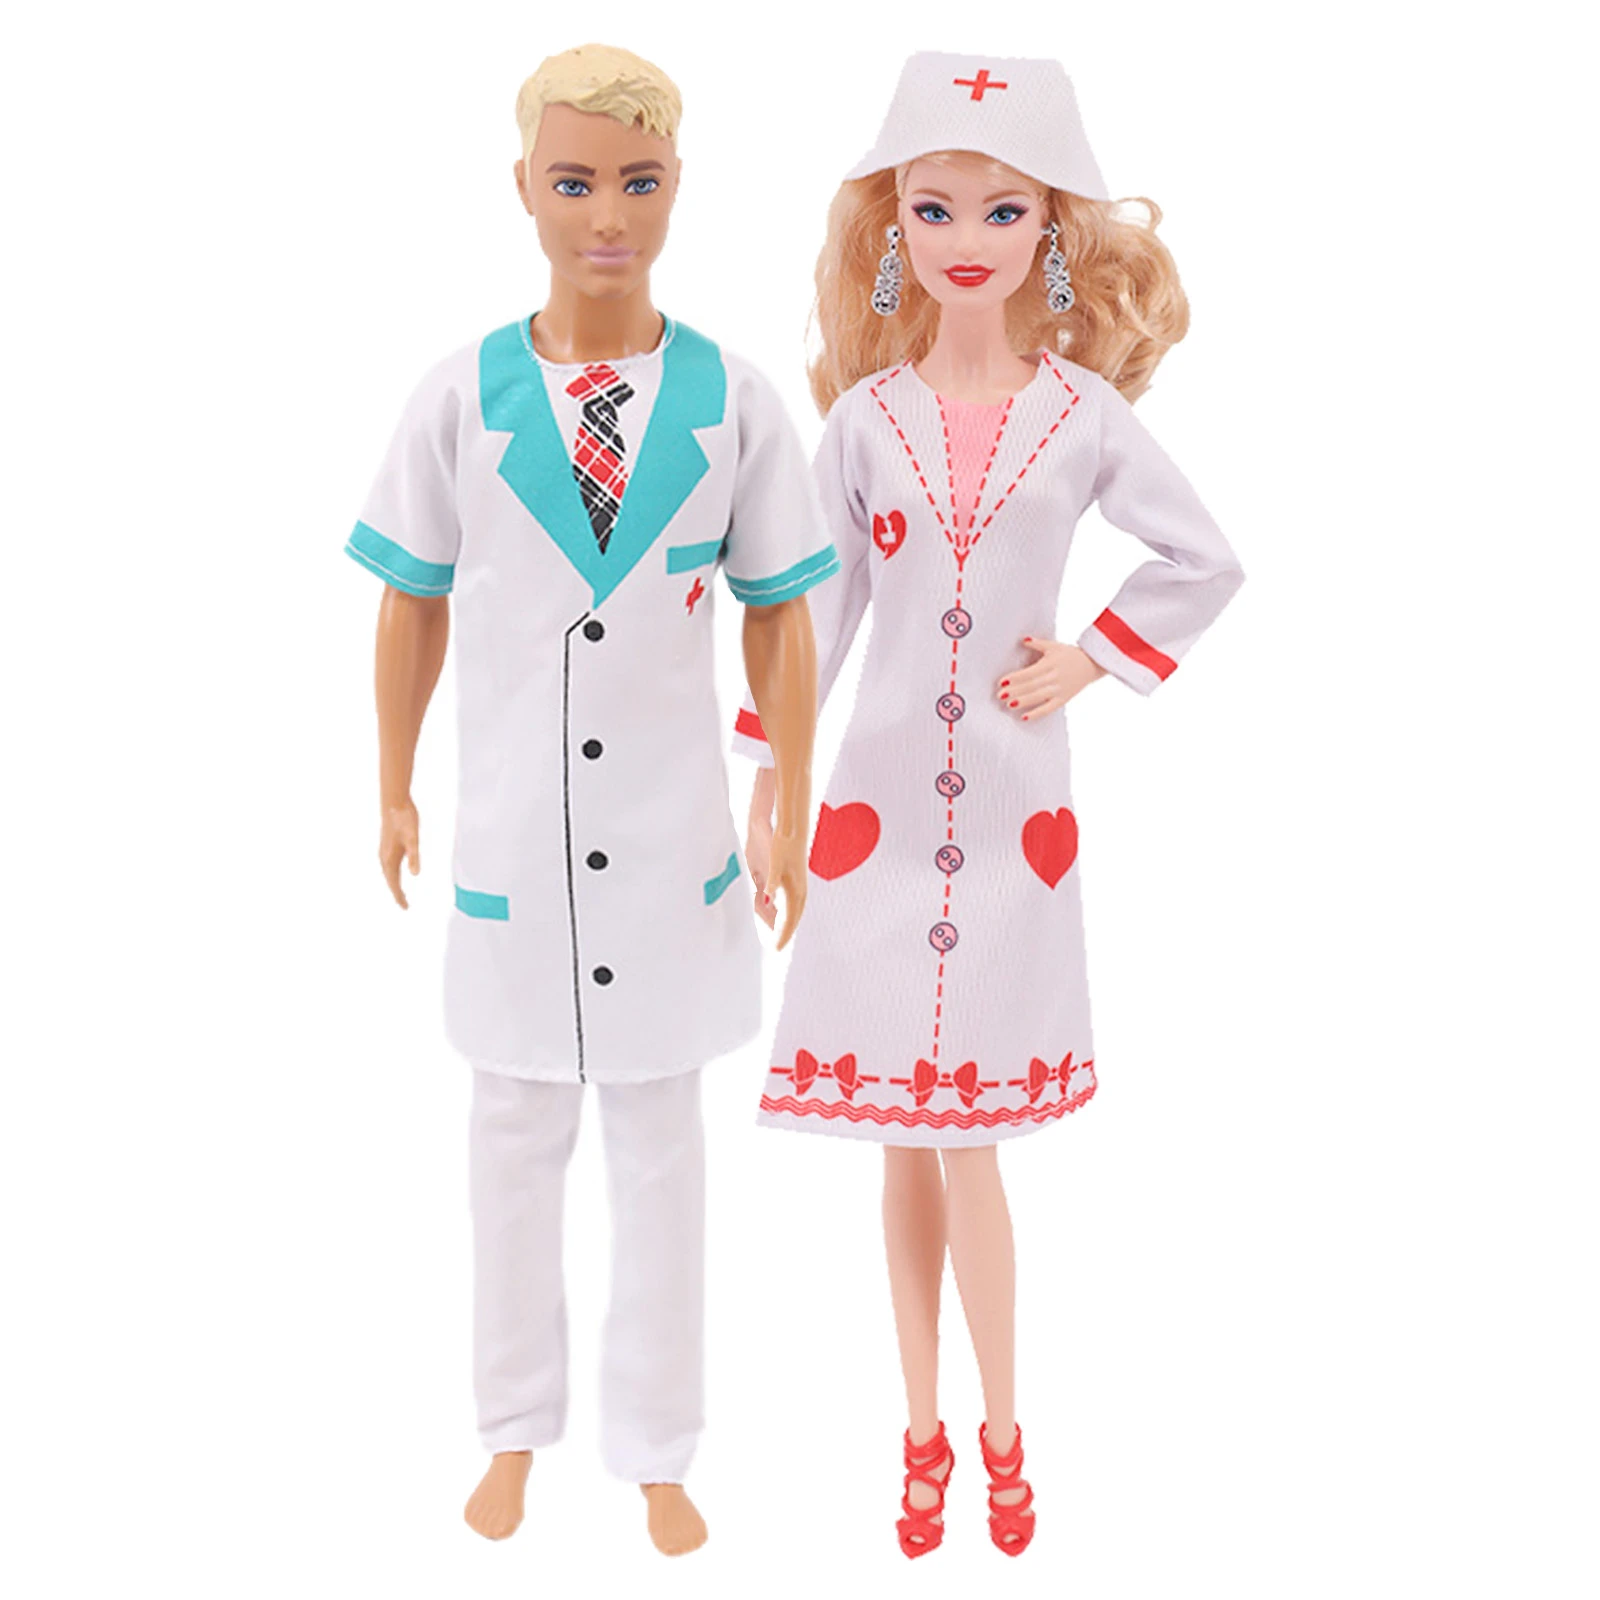 eksekverbar Berolige ugyldig Accessories Barbie Ken | Accessories Barbie Doctor | Barbie Ken Diy Costumes  - 2pcs /set - Aliexpress